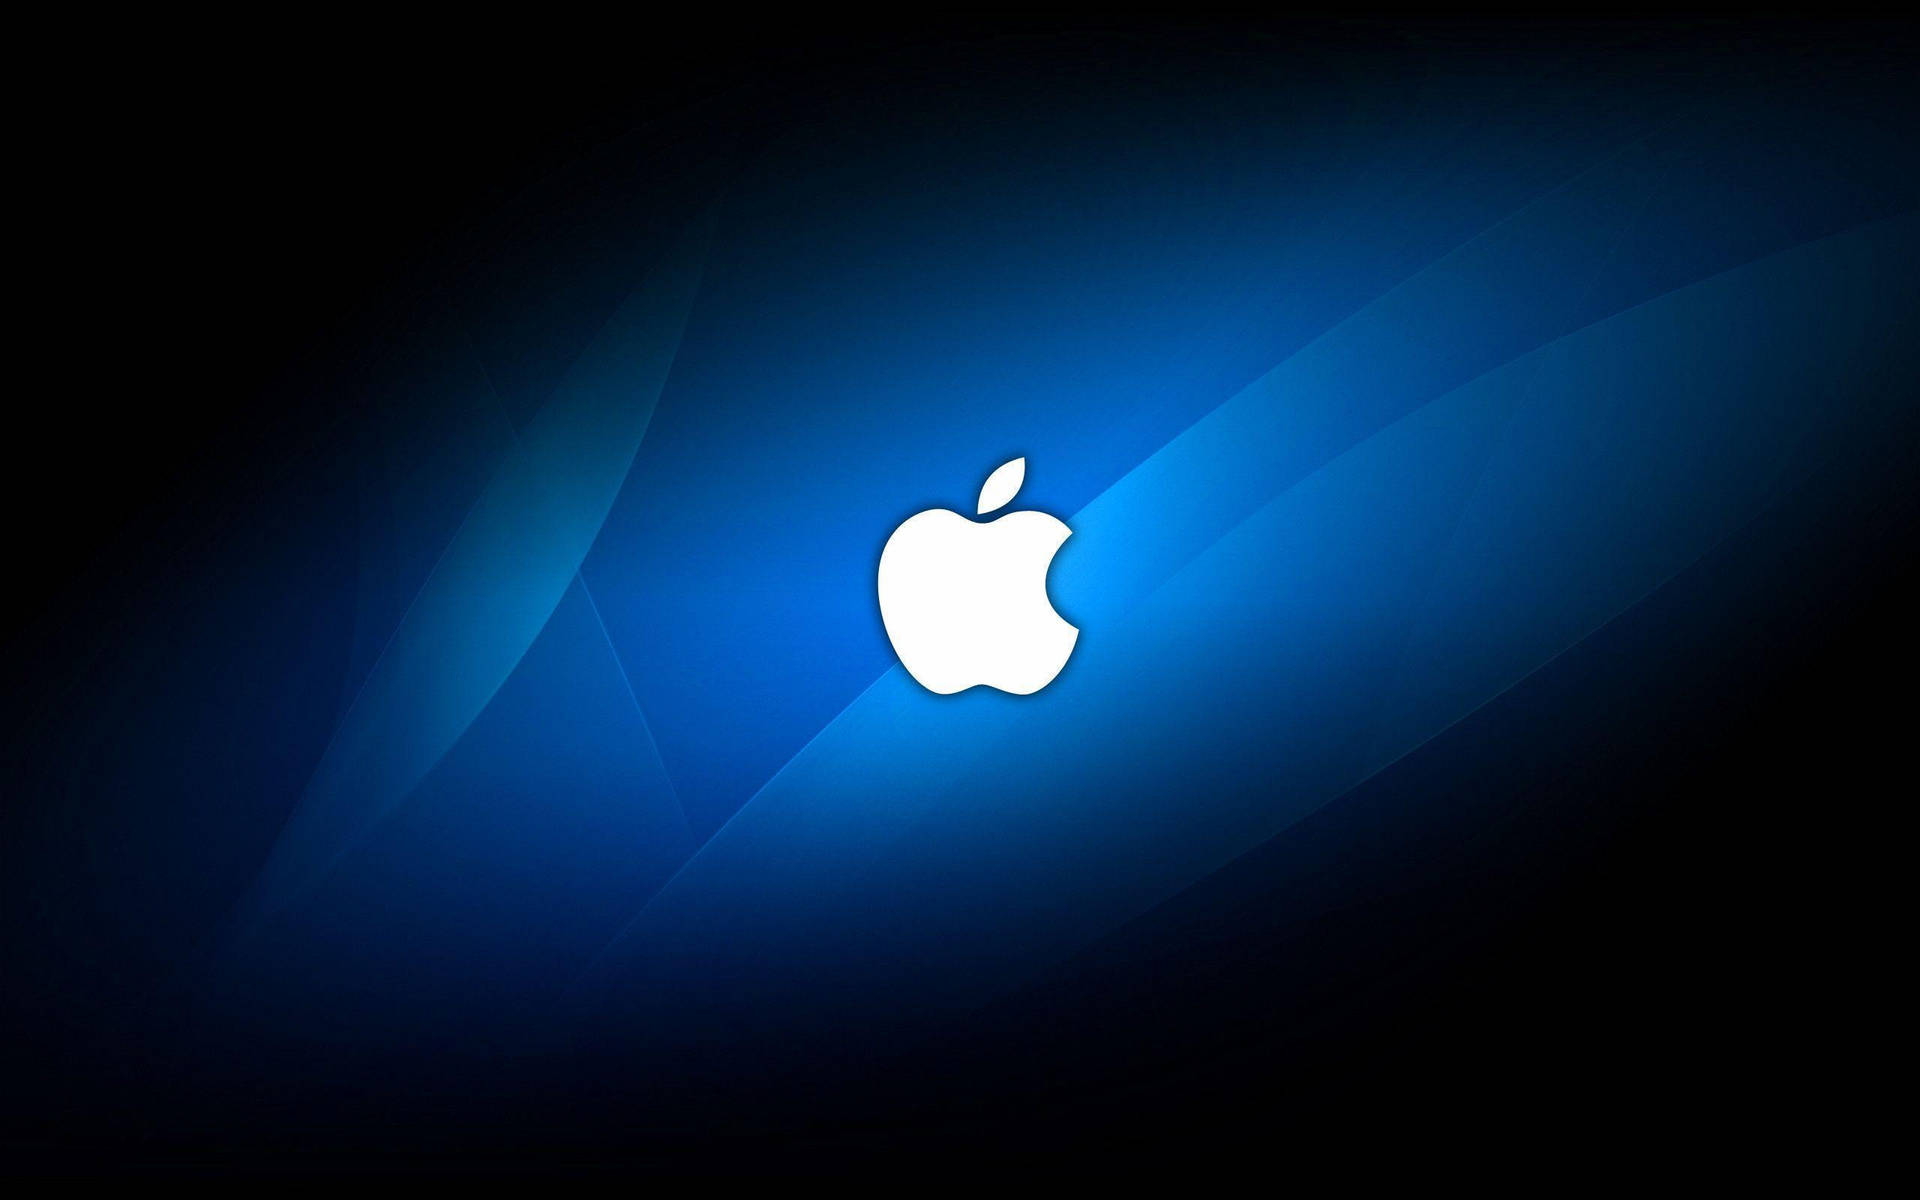 Apple Logo On Black And Blue